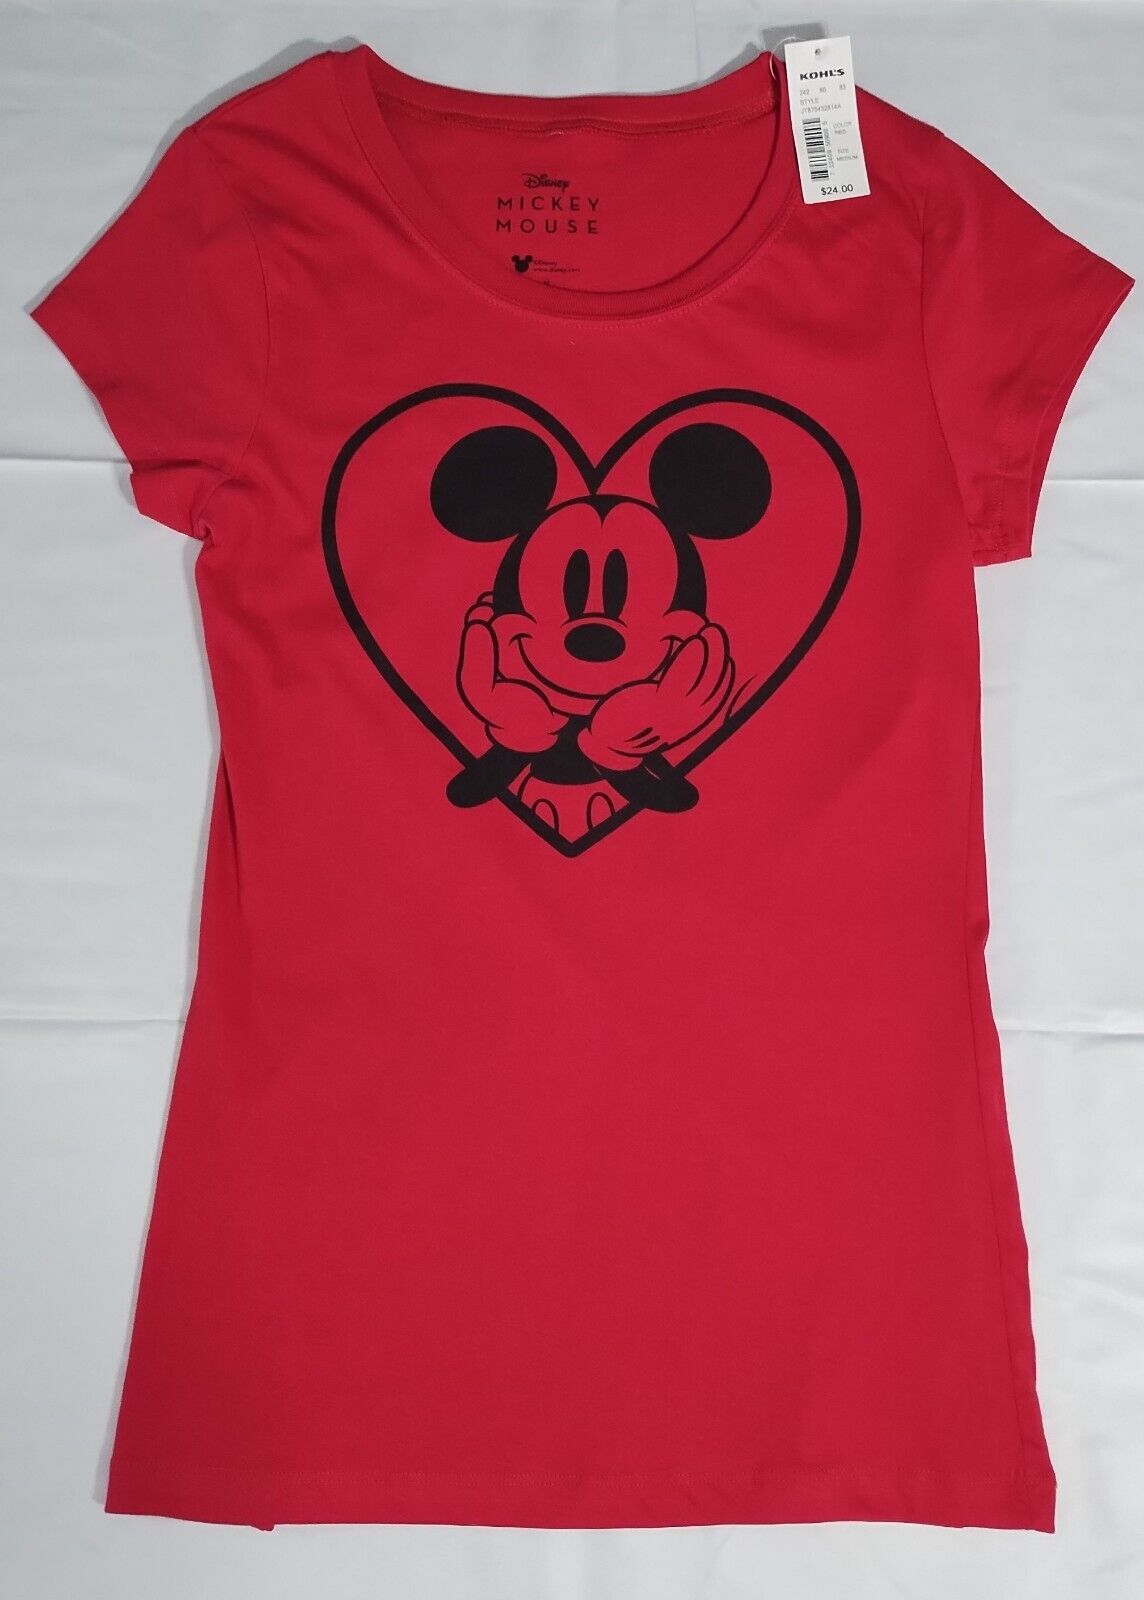 Girls/Juniors Medium Disney Mickey Mouse Short Sleeve Red  T-shirt. NWT